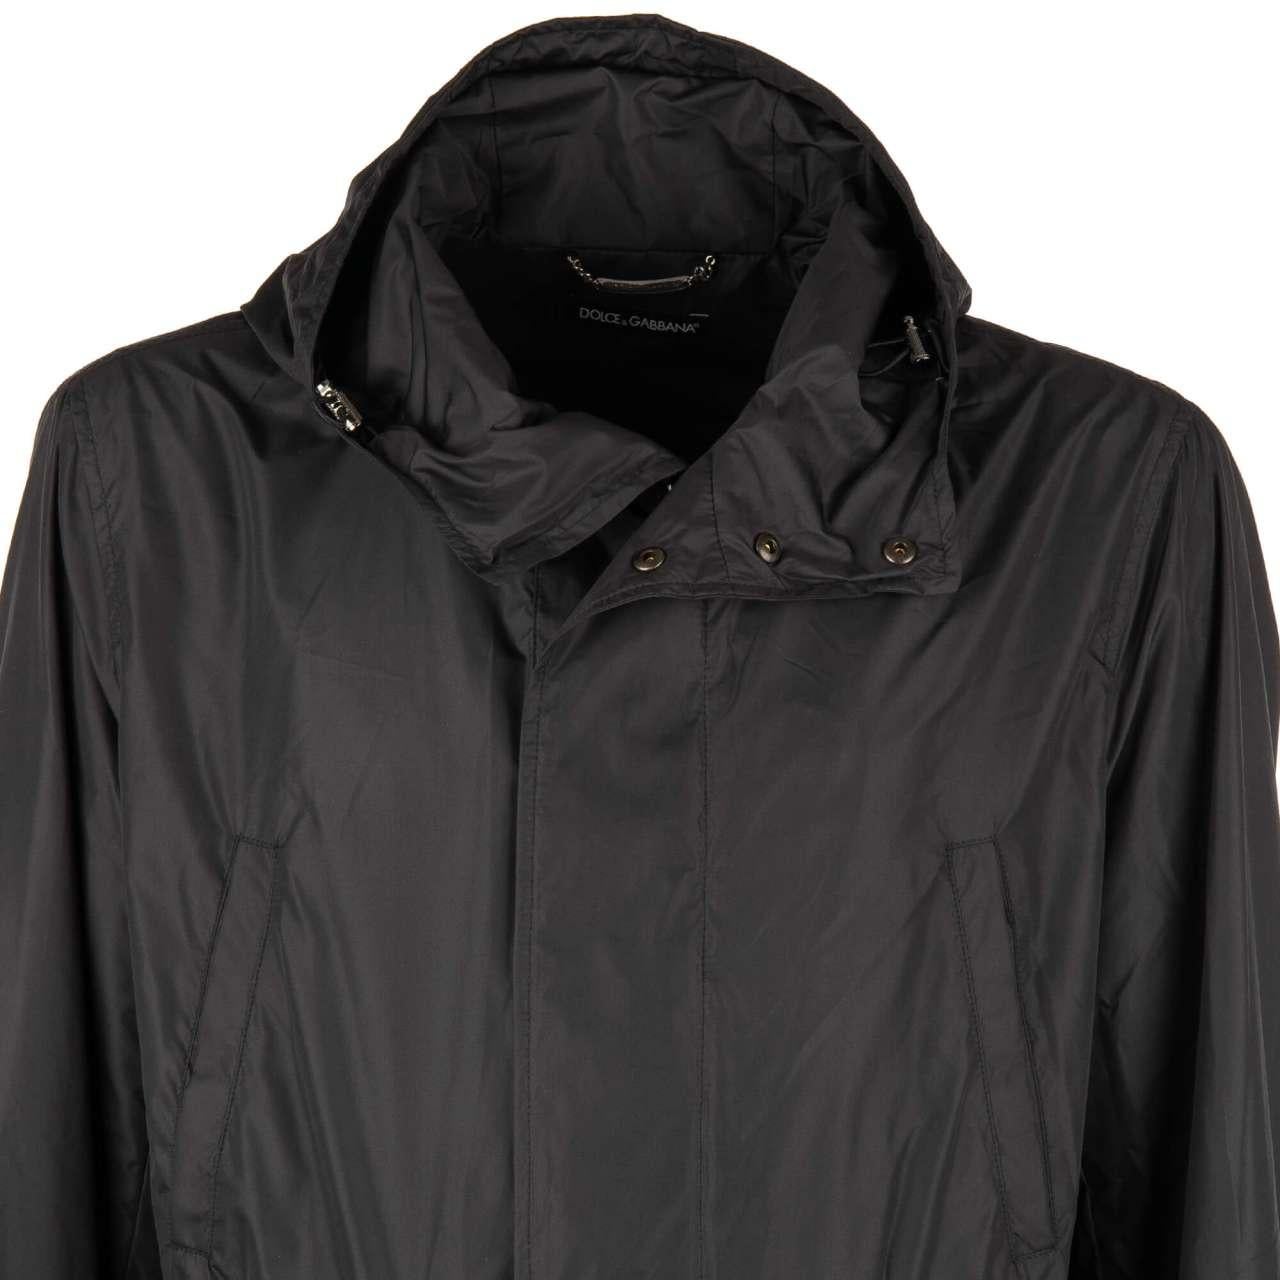 Dolce & Gabbana Light Hooded Rain Parka Jacket with Pockets and Logo Black 48 For Sale 2